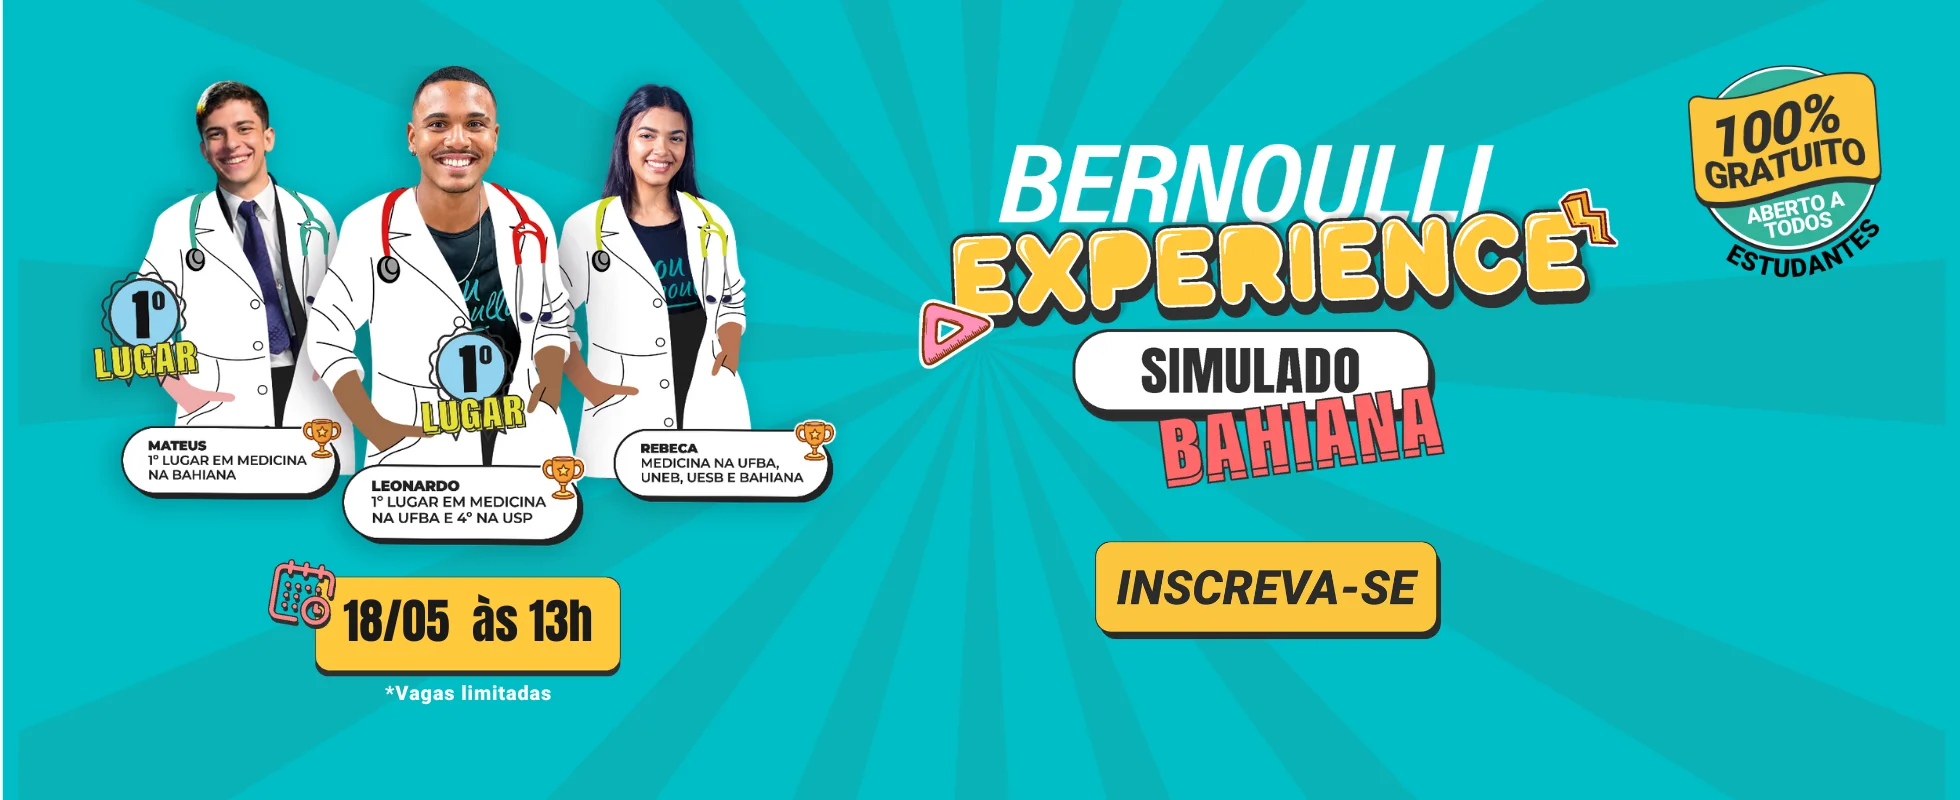 Bernoulli Experience - Simulado Bahiana - Pré-vestibular Bernoulli Salvador.